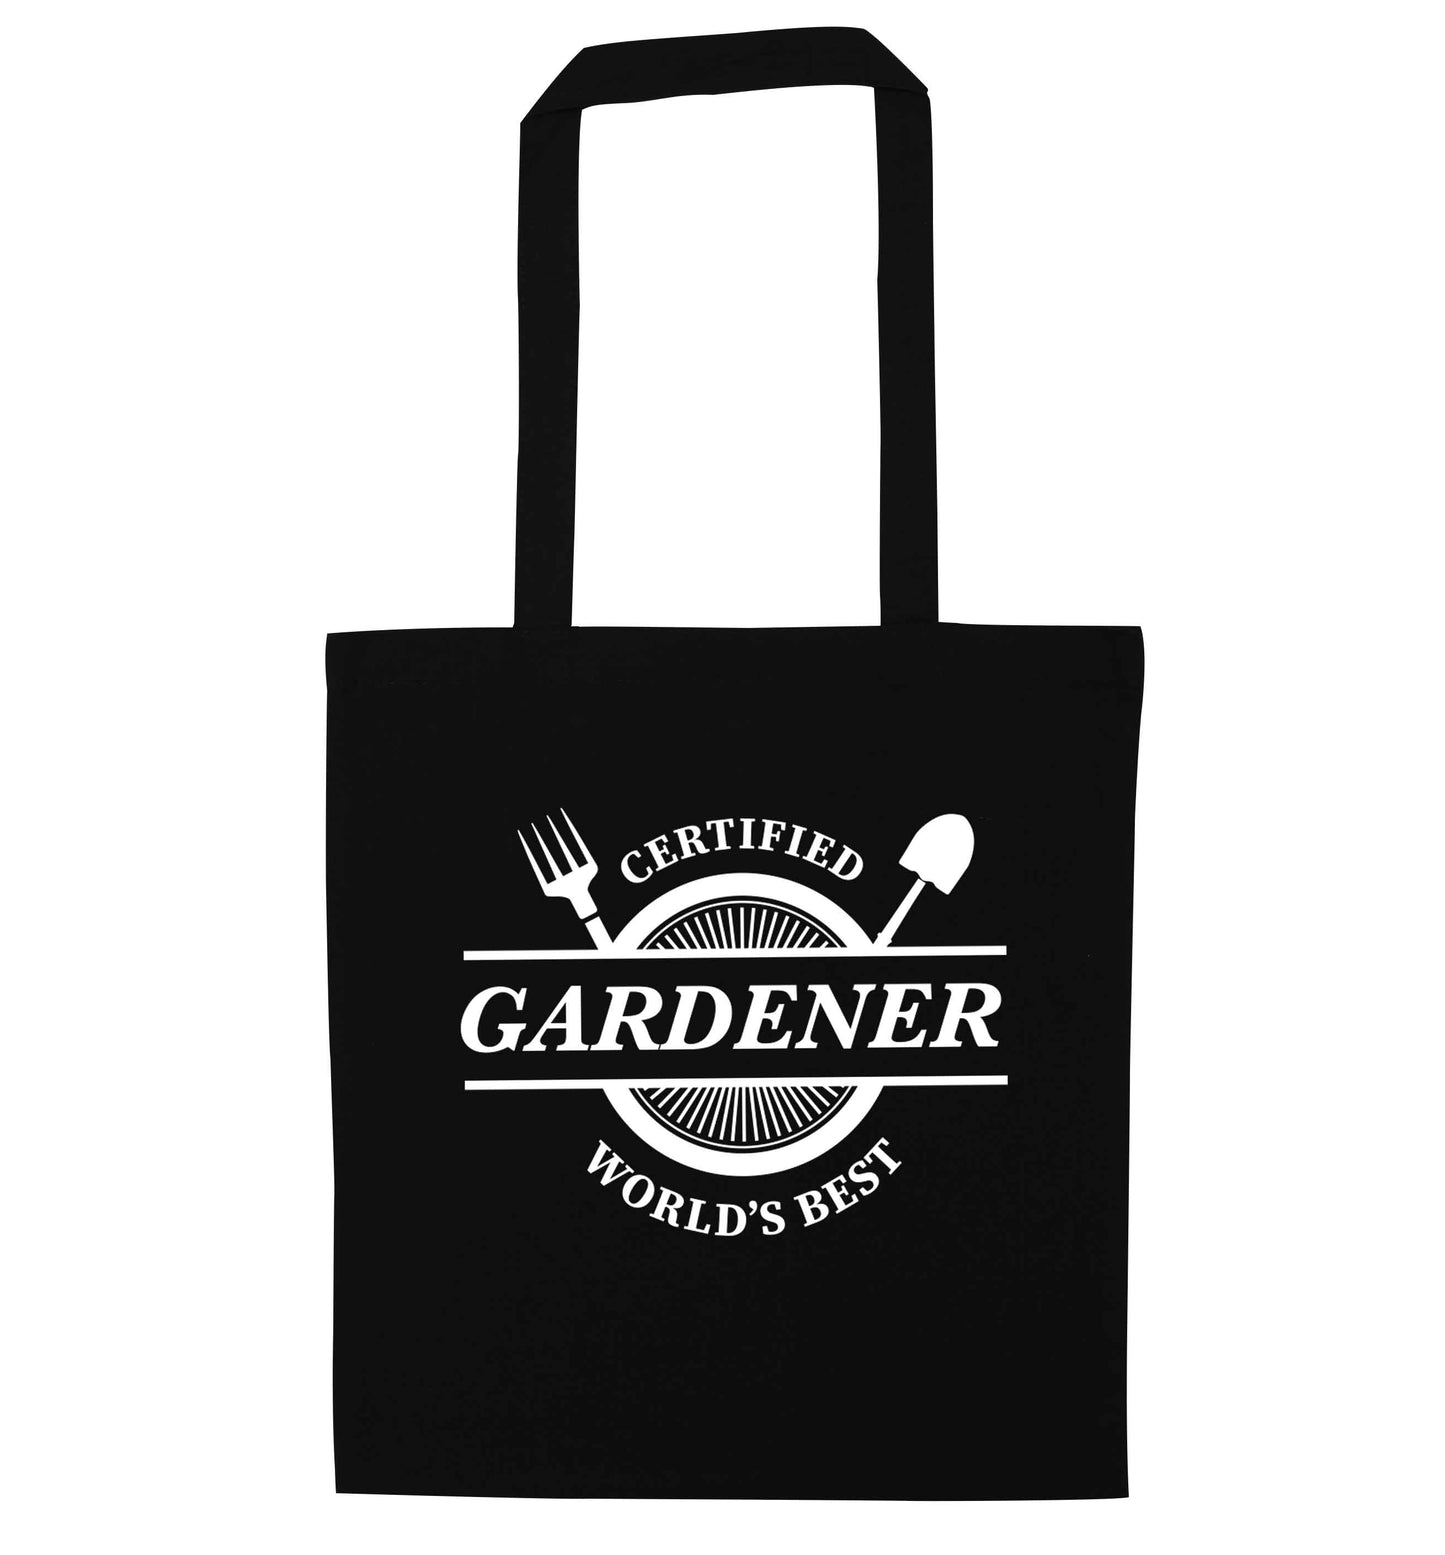 Certified gardener worlds best black tote bag